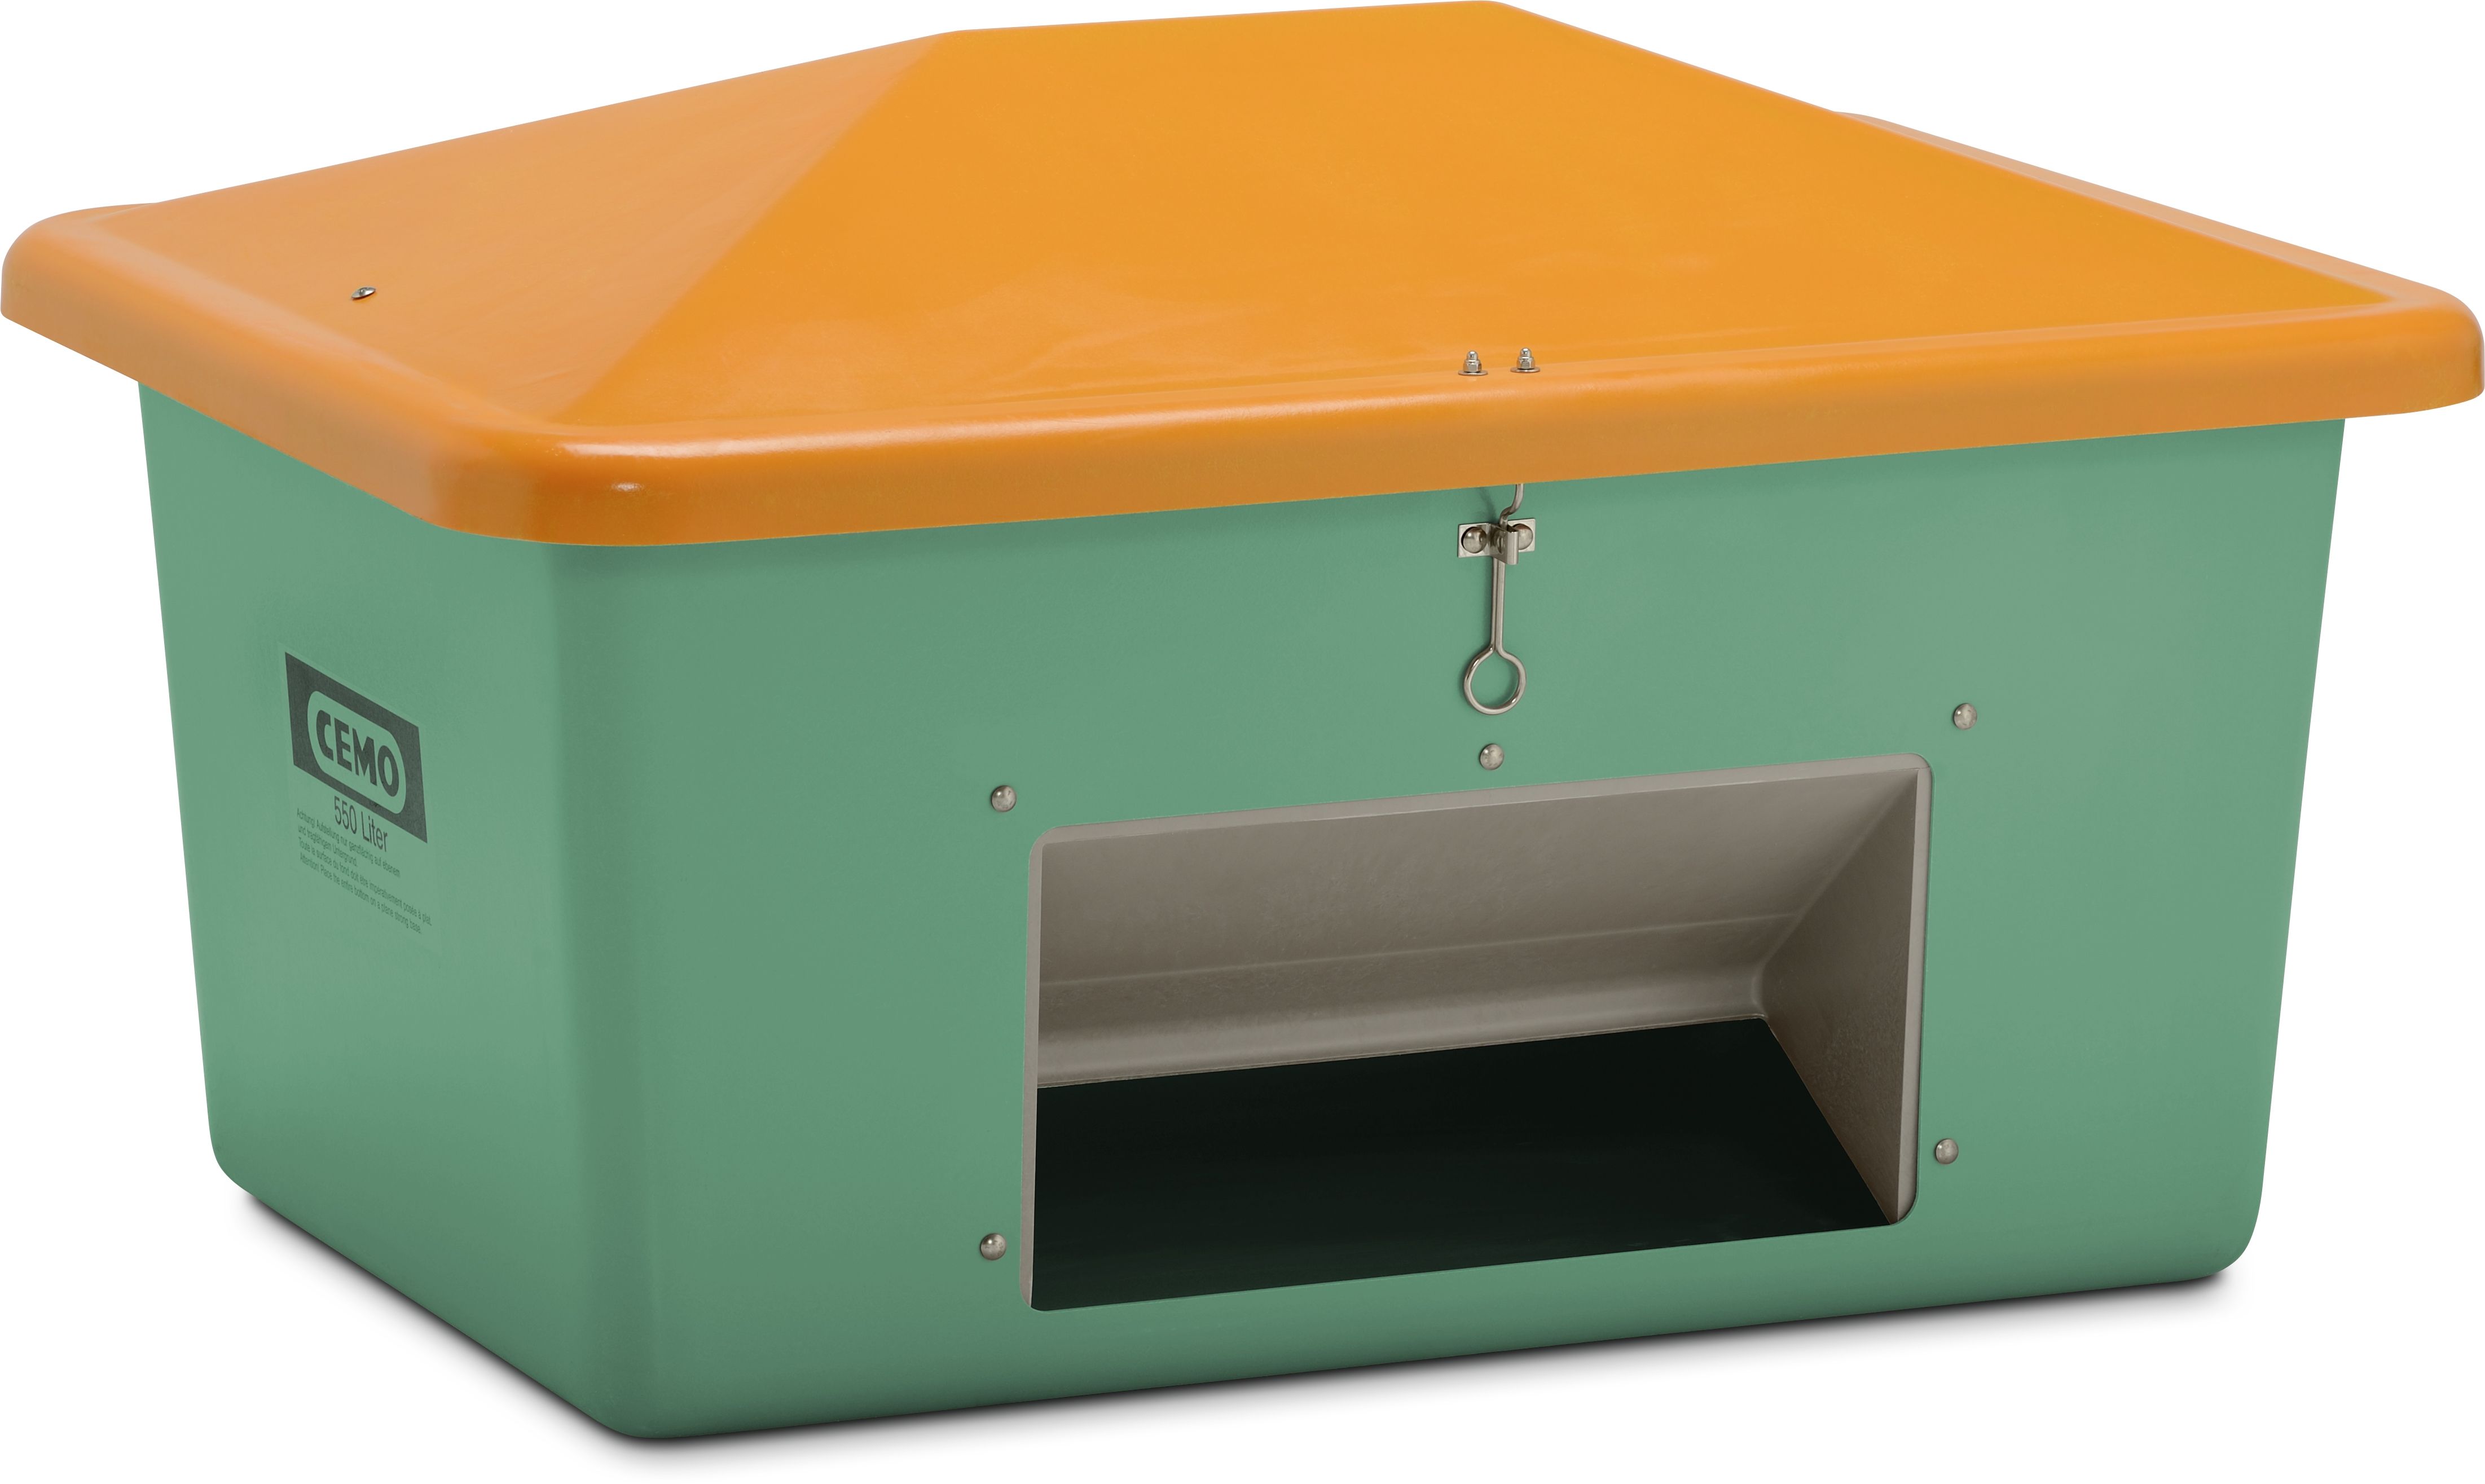 CEMO Streugutbehälter "V" 550 l, grün/orange, mit Vandalismusdeckel - 10901